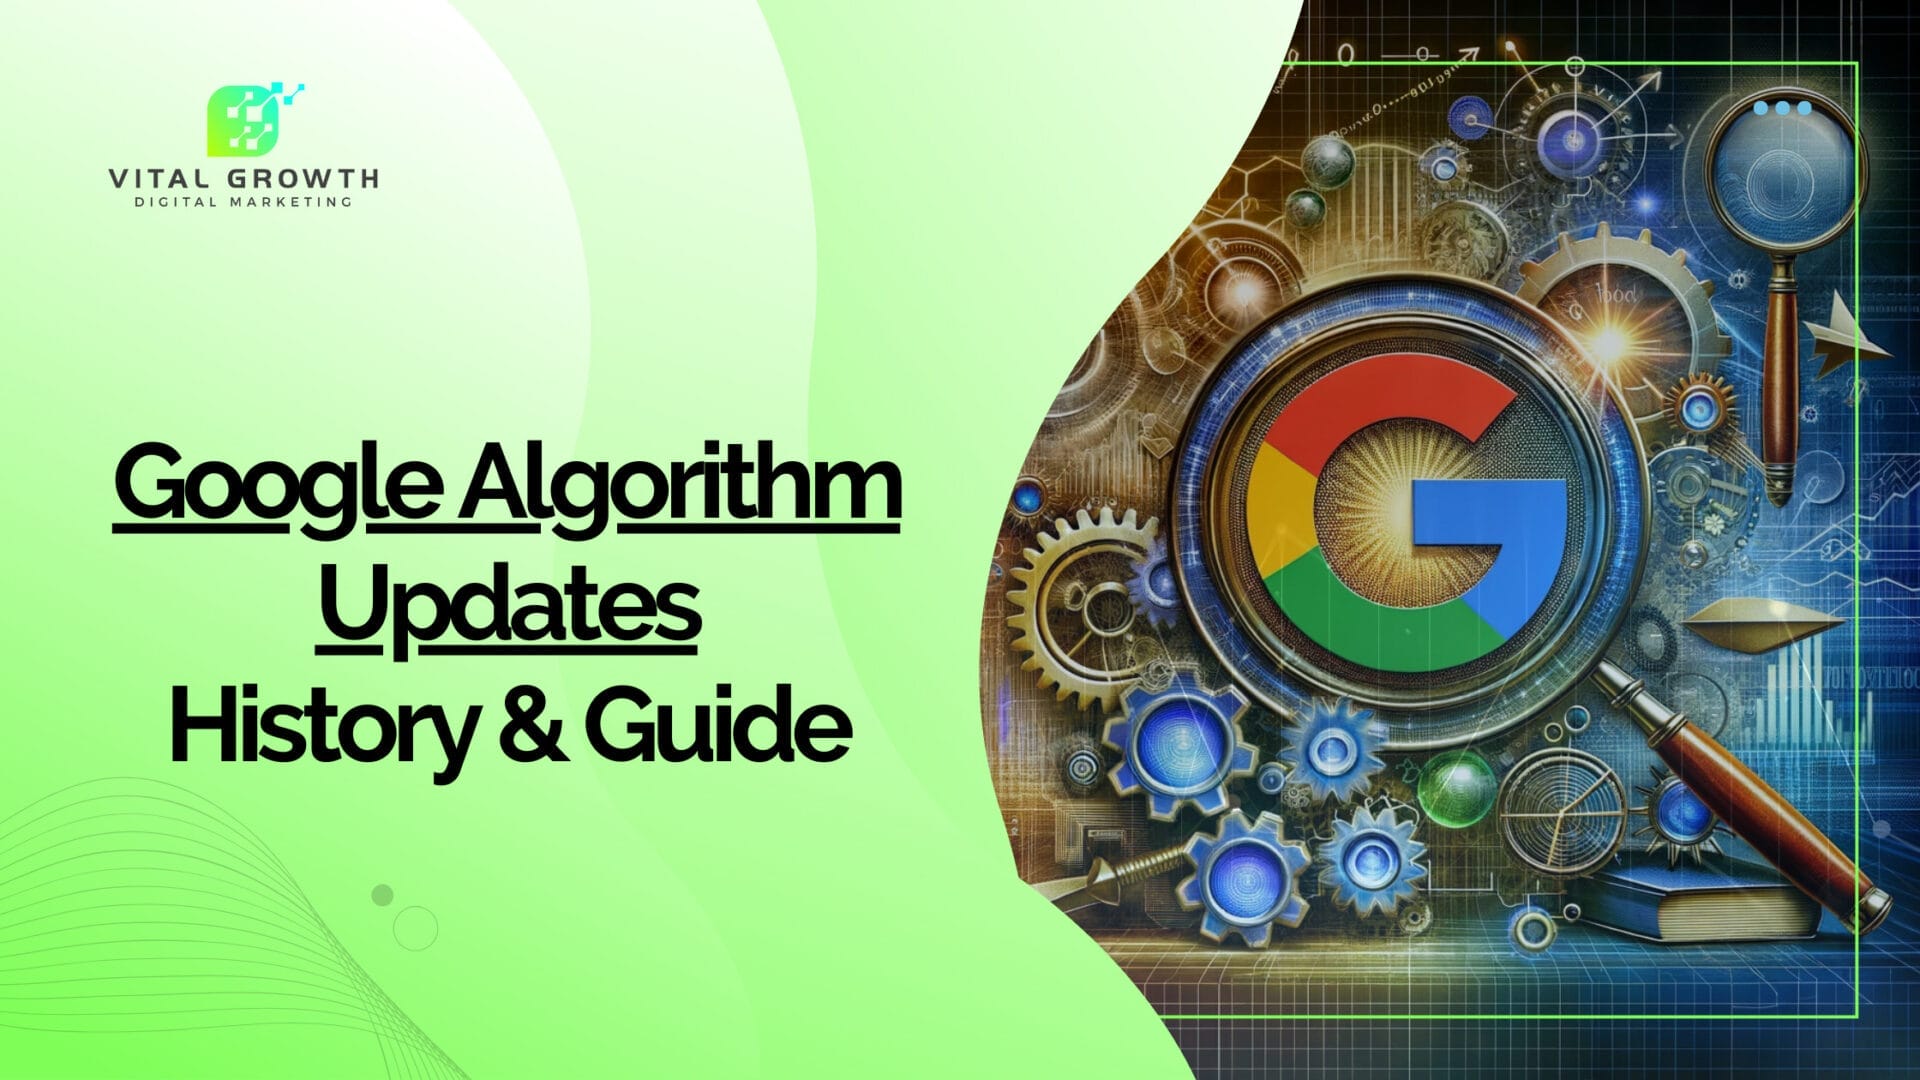 Evolution of Google Search Algorithms